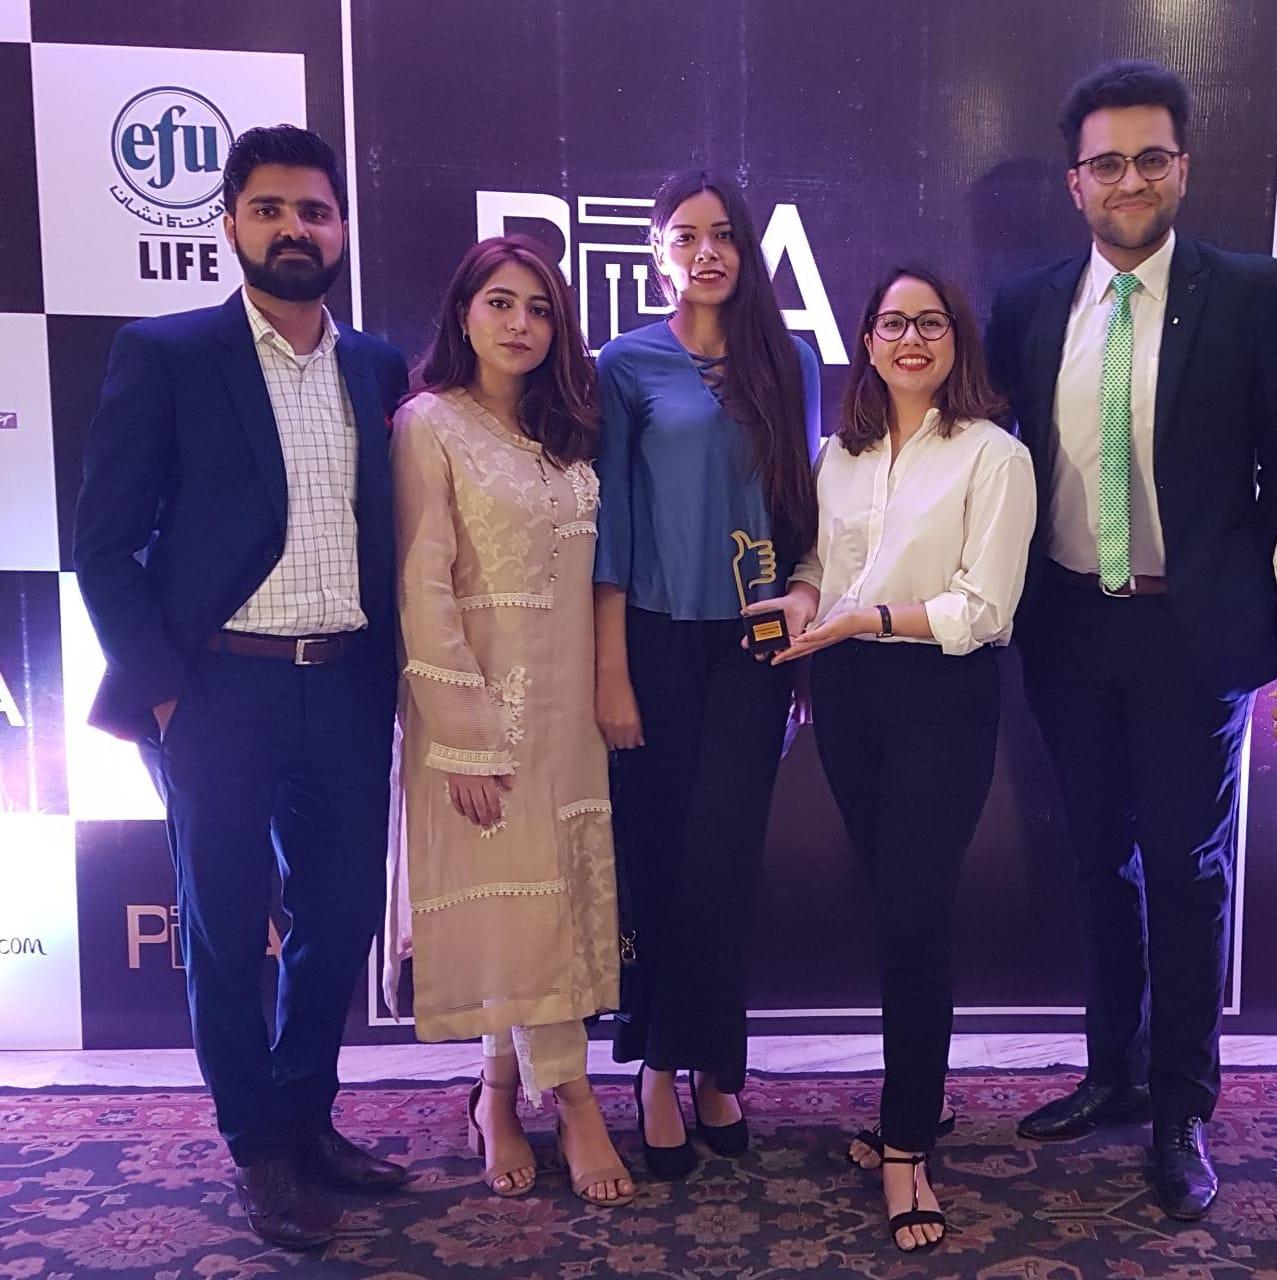 Careem named Best Ride Hailing Service in Pakistan at Pak Digi Awards 2019